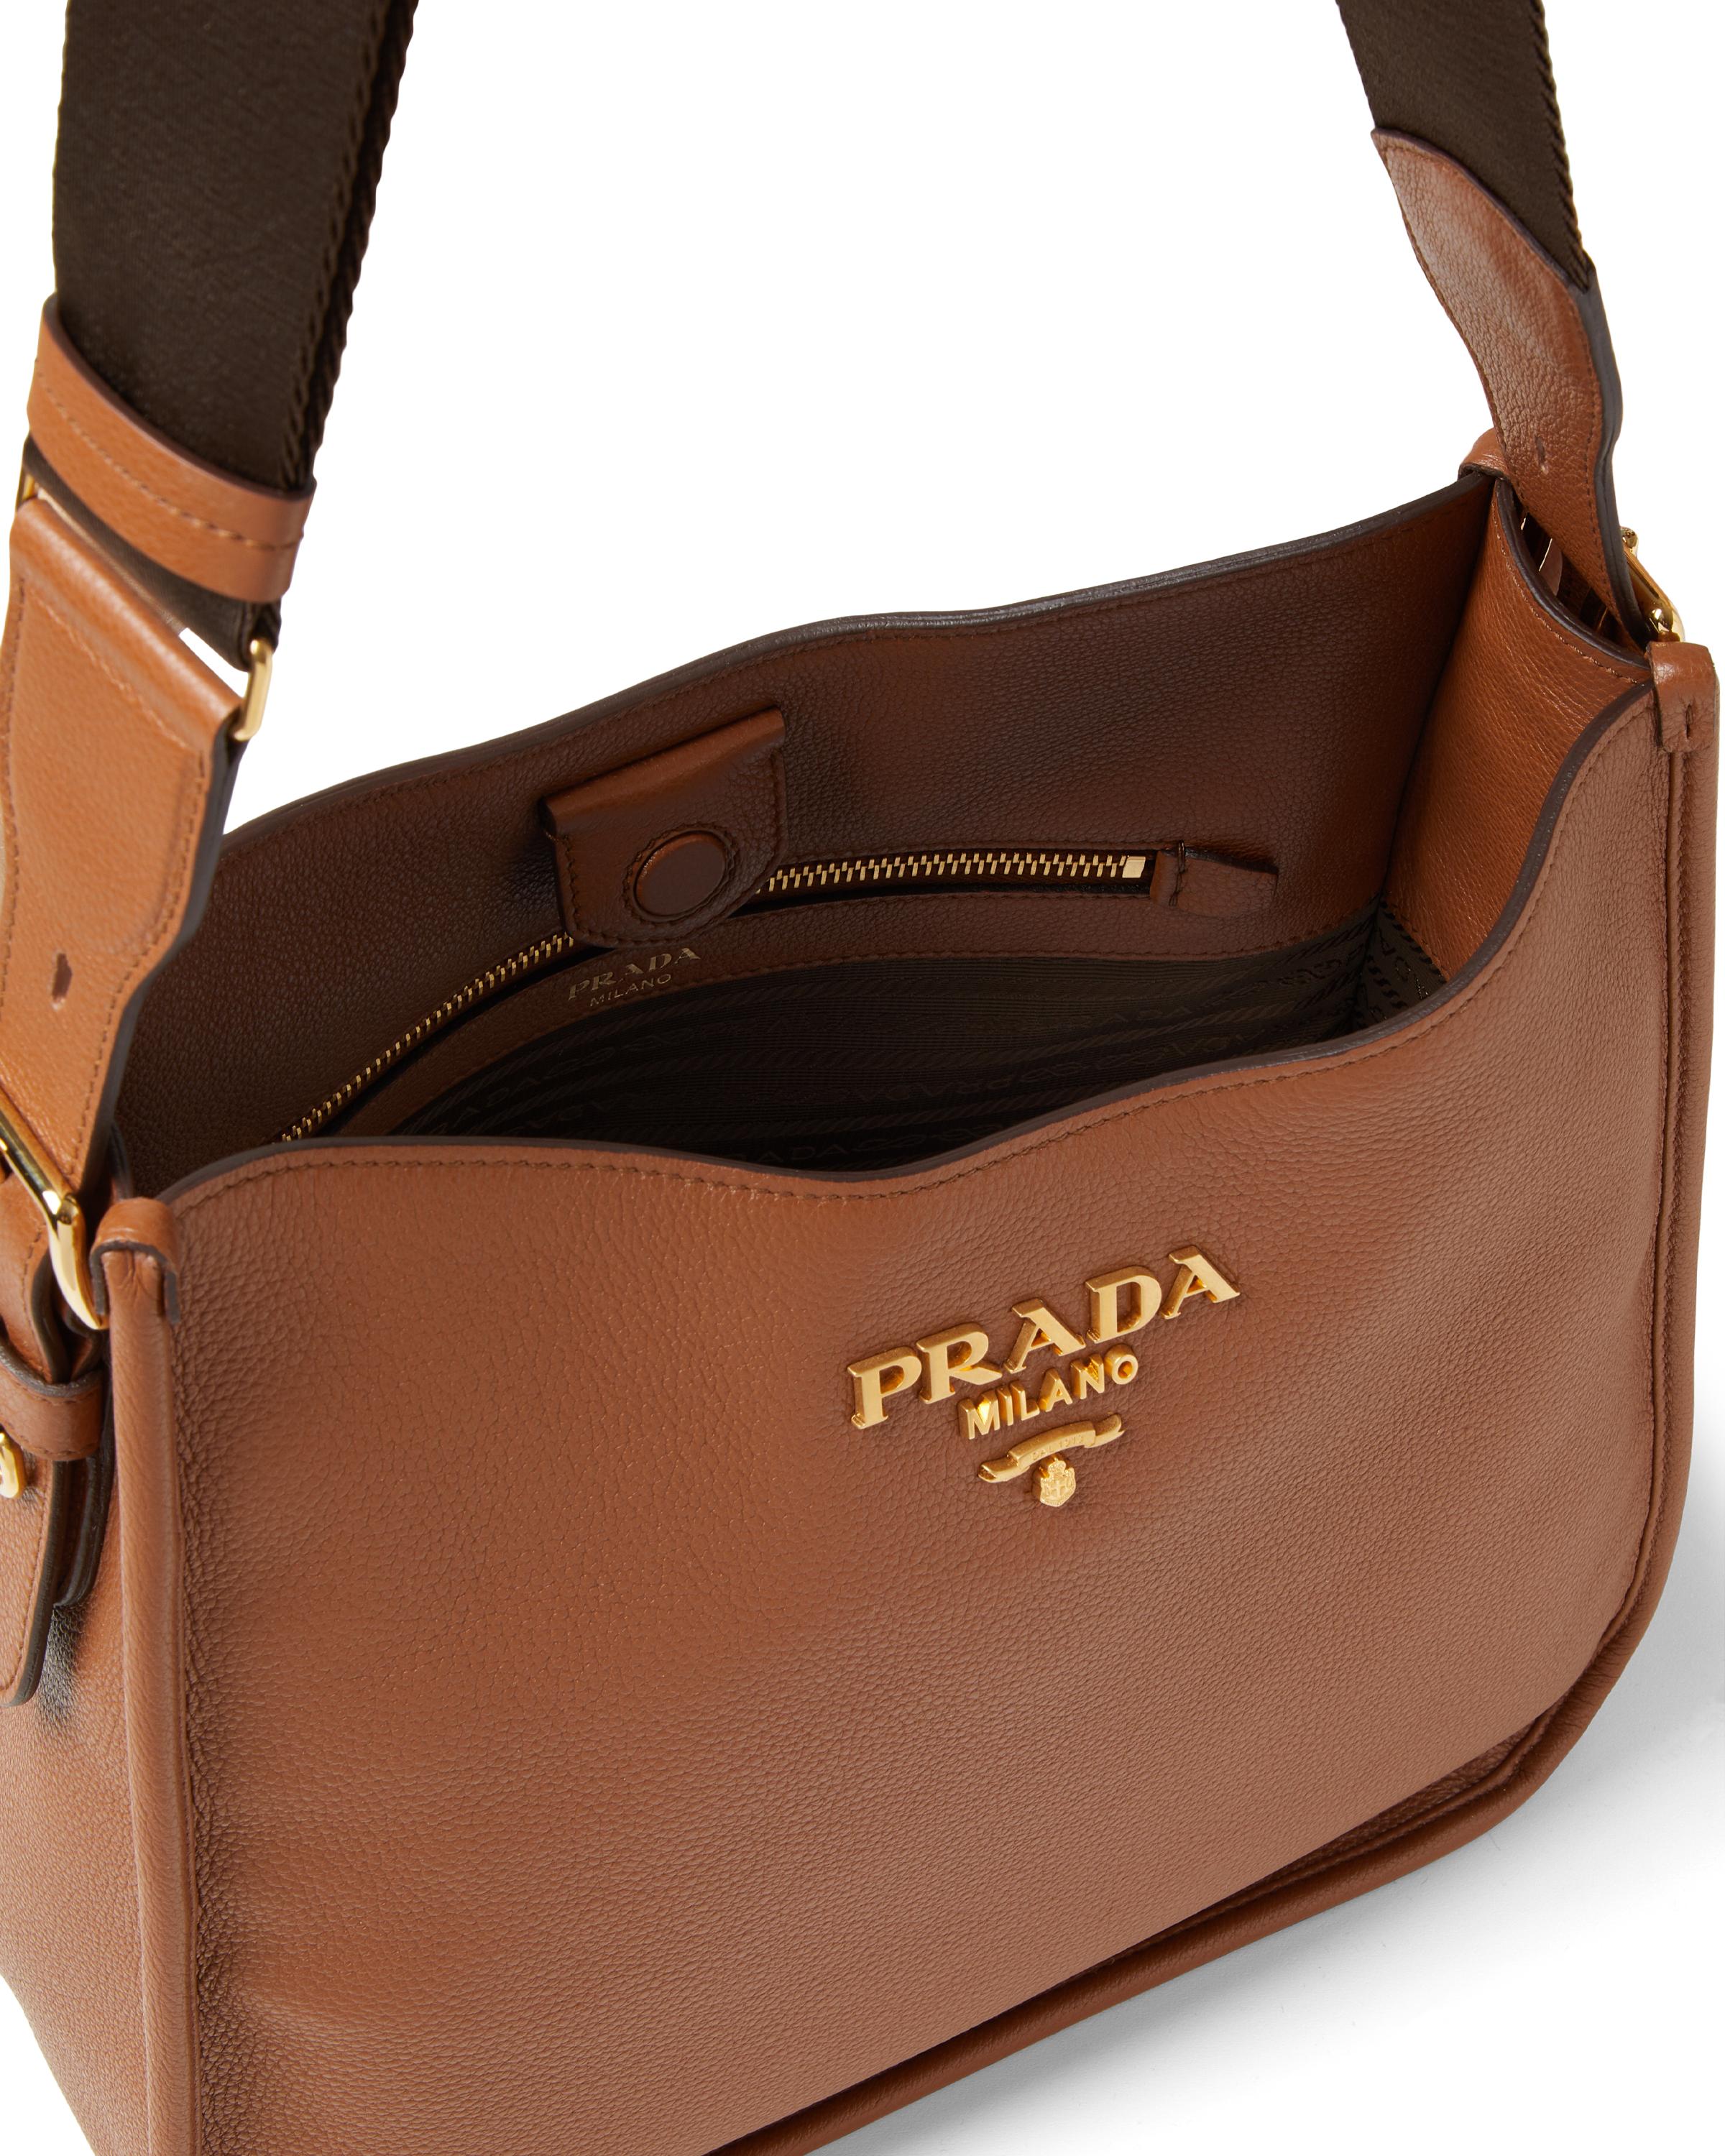 Prada Leather Hobo Bag in Brown | Lyst